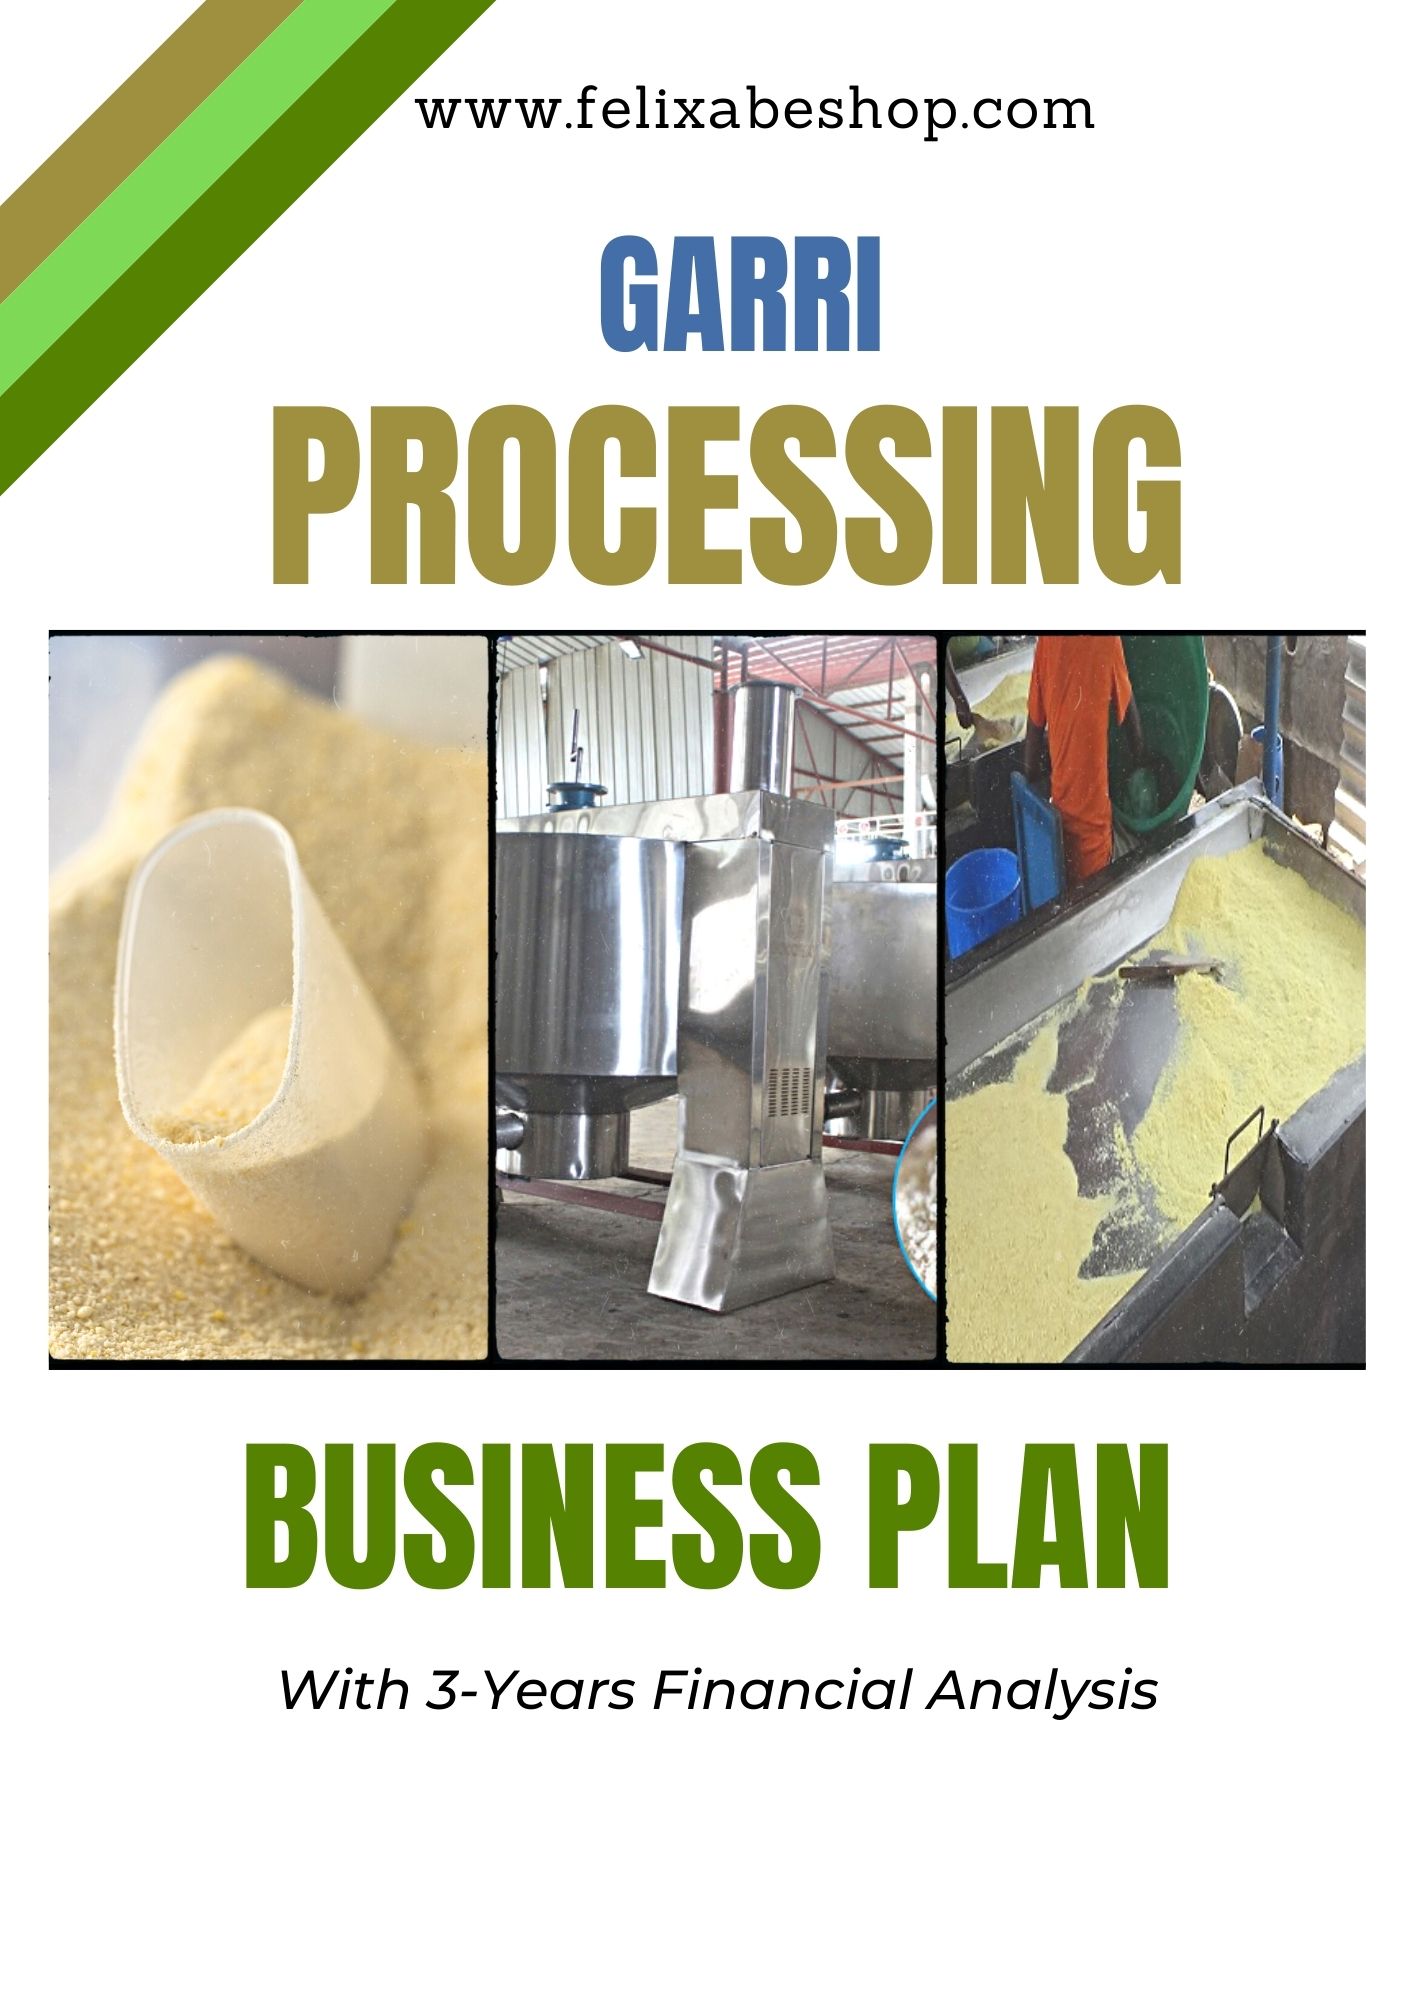 garri production business plan pdf